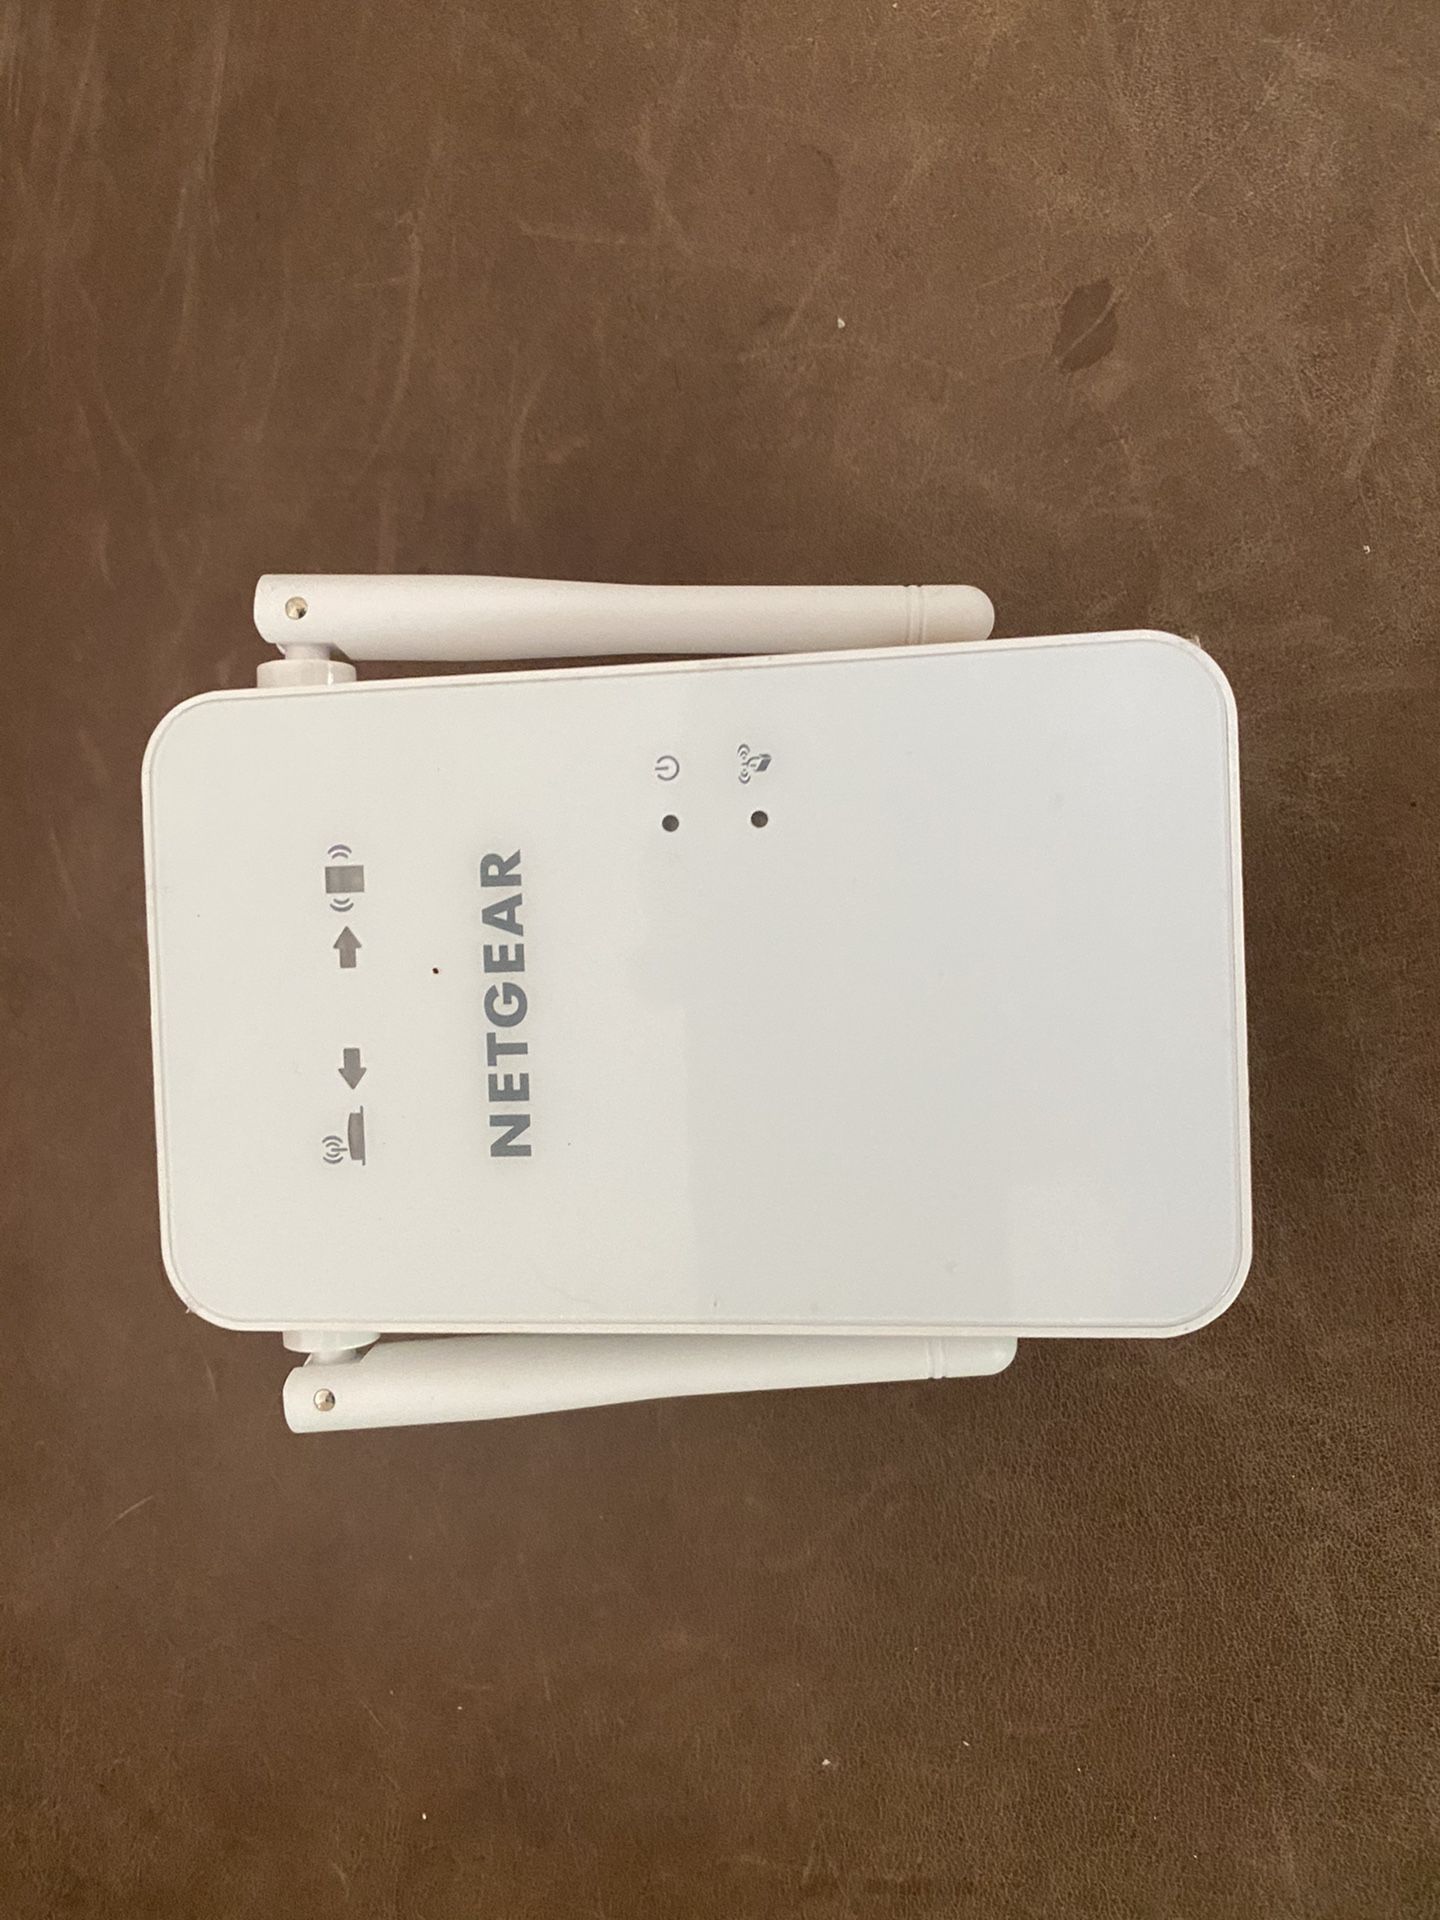 Wifi mesh extender by Netgear